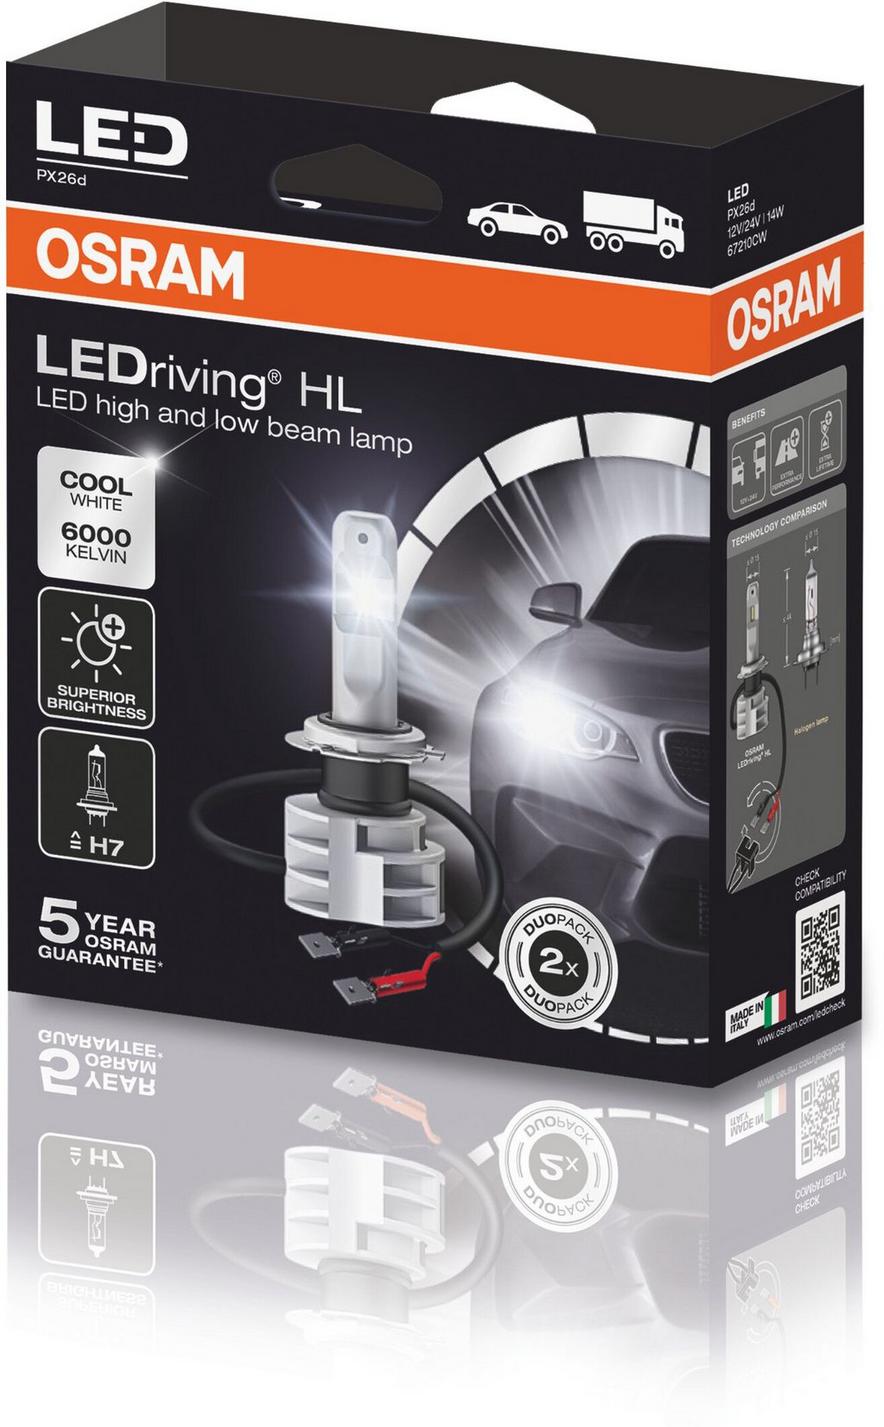 LEDriving Gen2 H7 LED Bulbs Twin Pack